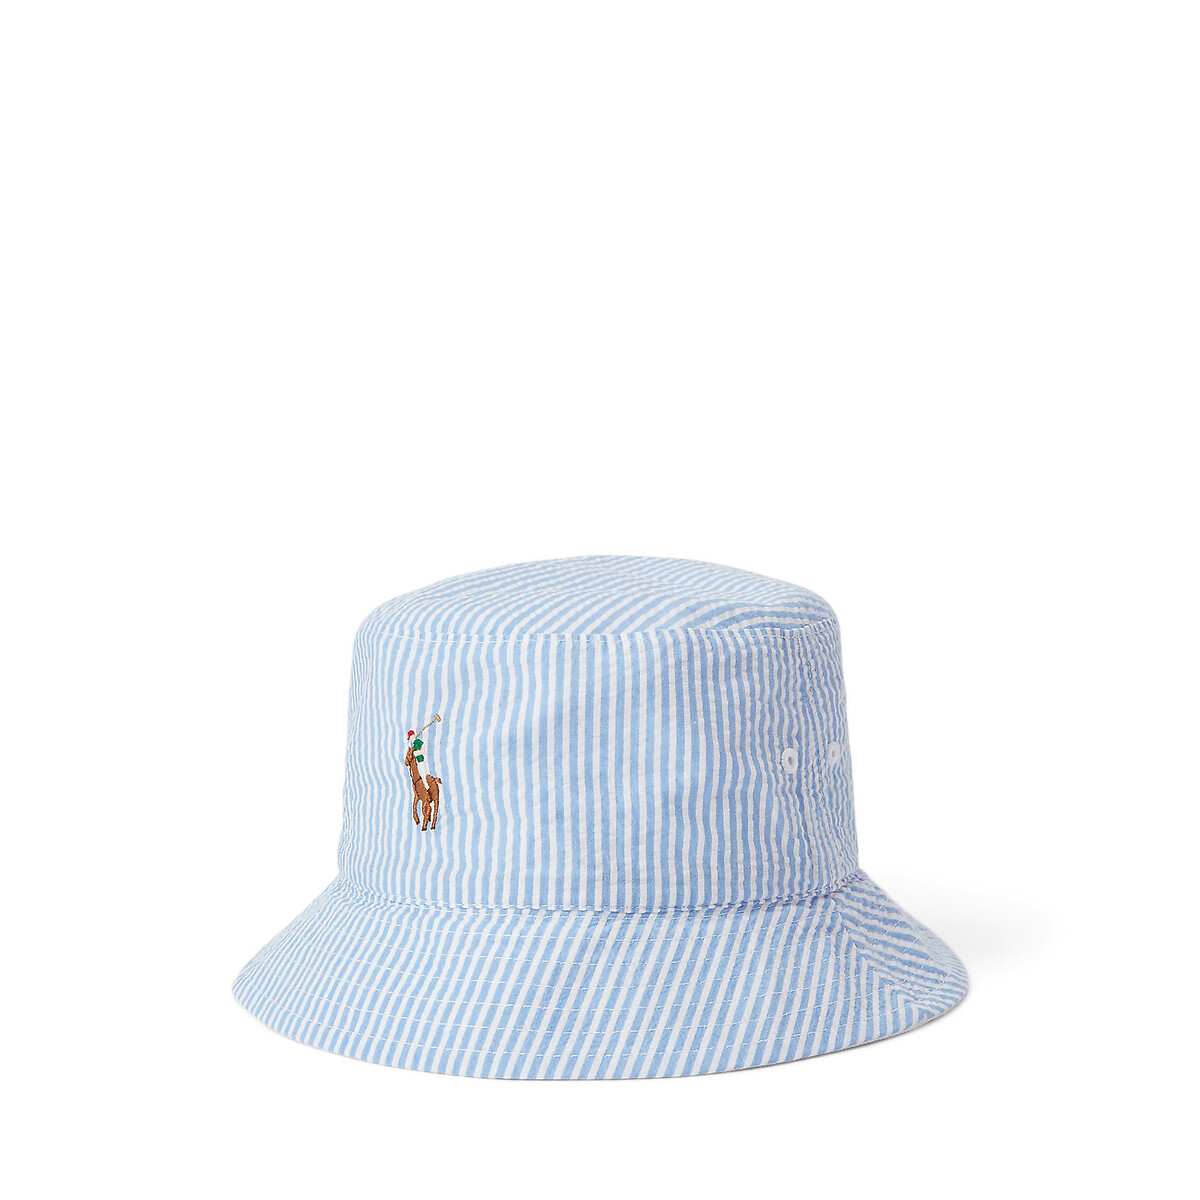 Шляпа-боб двухсторонняя из тонкой полосатой ткани  L/XL белый LaRedoute, размер L/XL